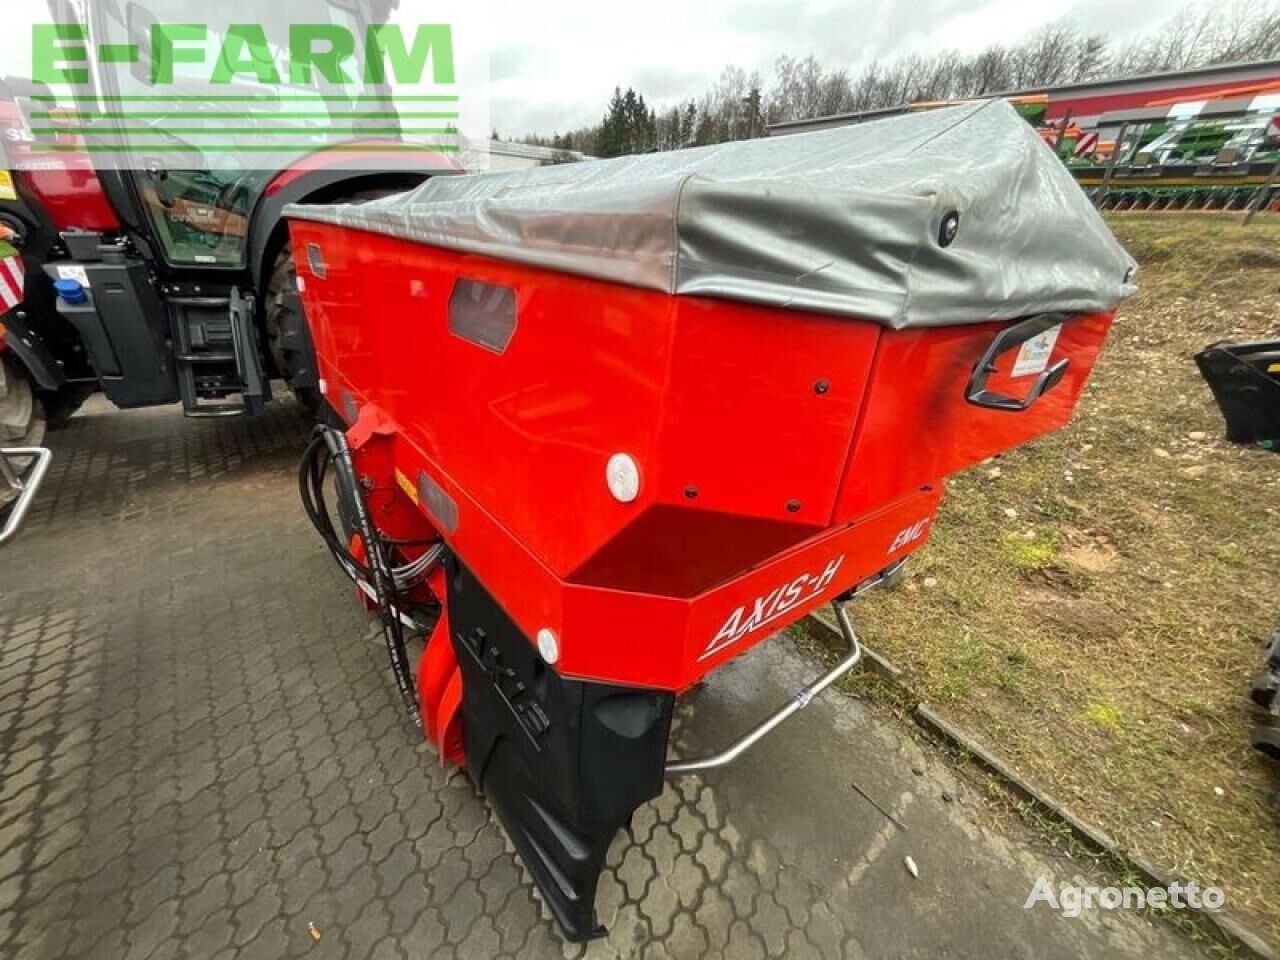 axis m 30.1 mounted fertilizer spreader